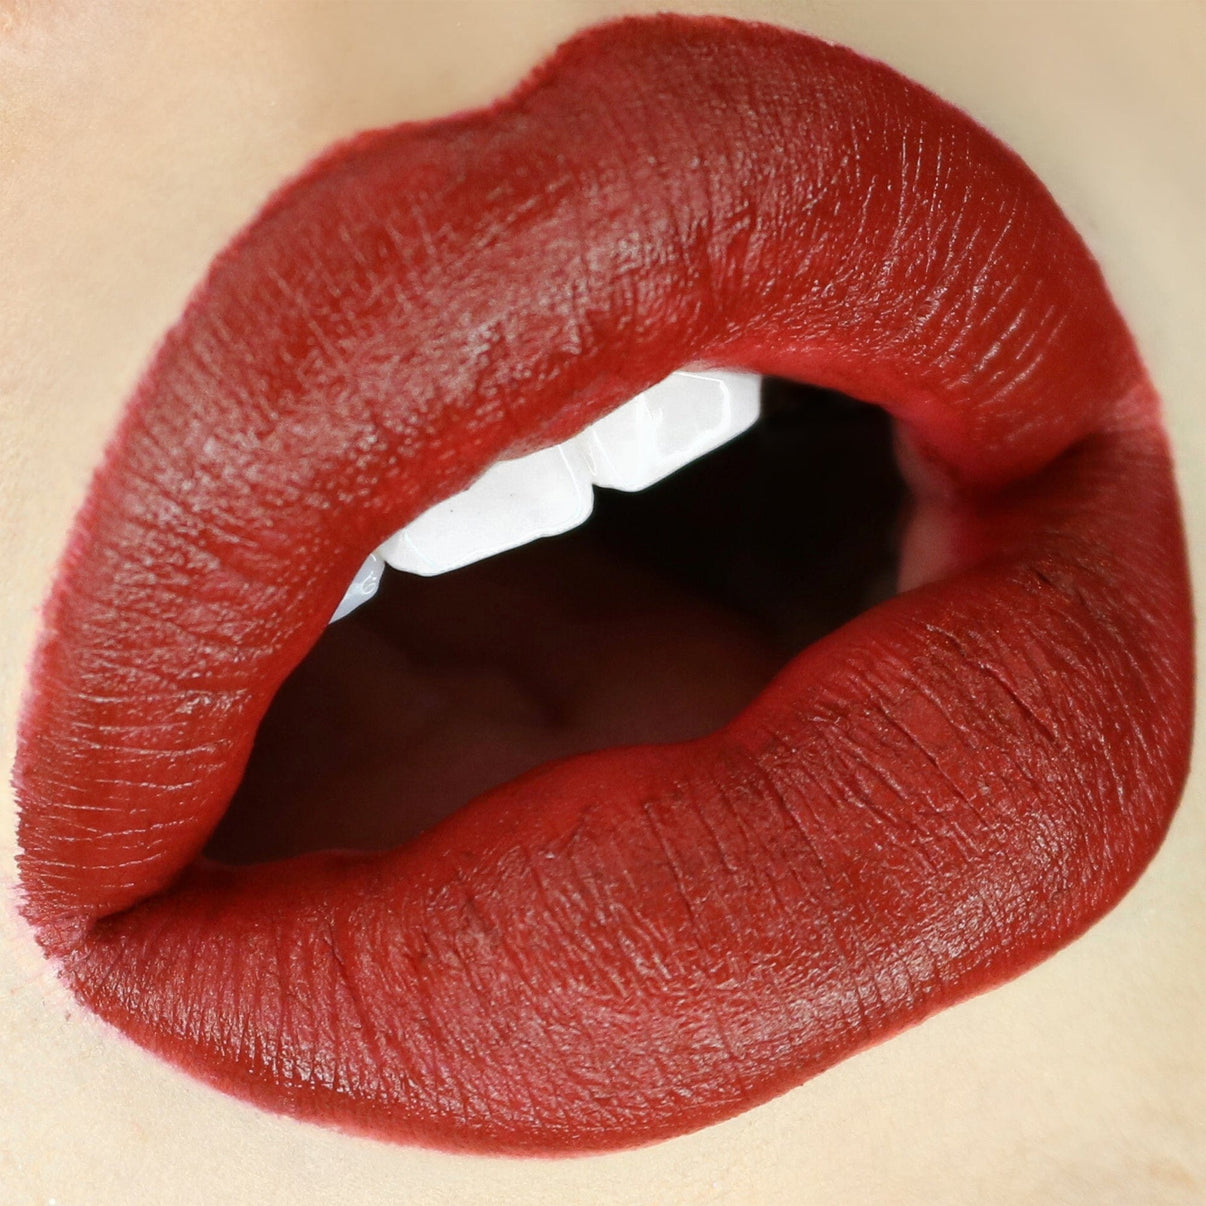 lips wearing Intense Matte Lip + Cheek pencil in shade vintage